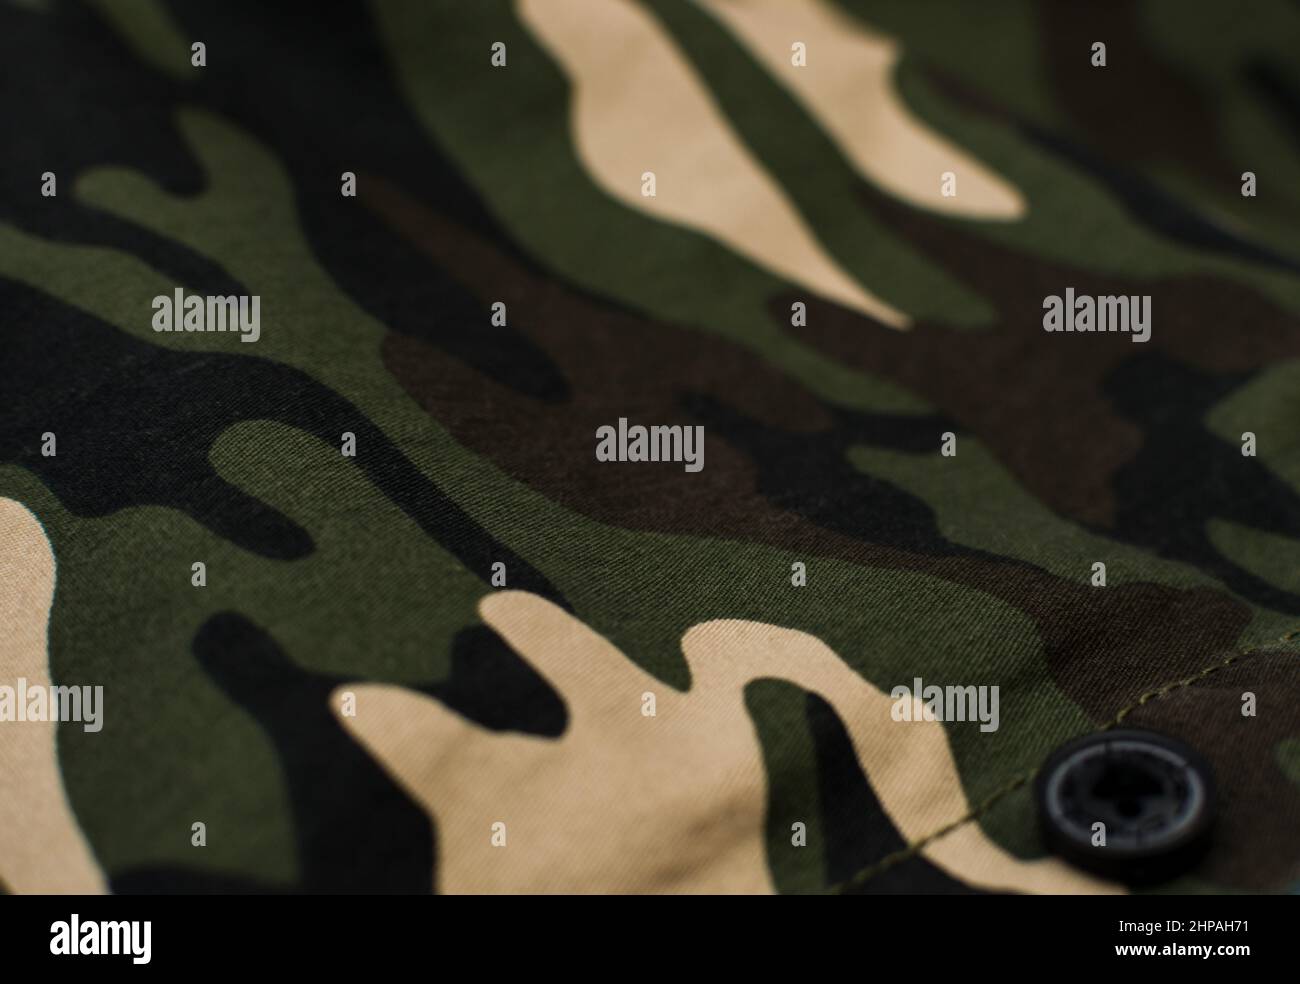 Military camouflage uniform, textile, fabric, close up Stock Photo